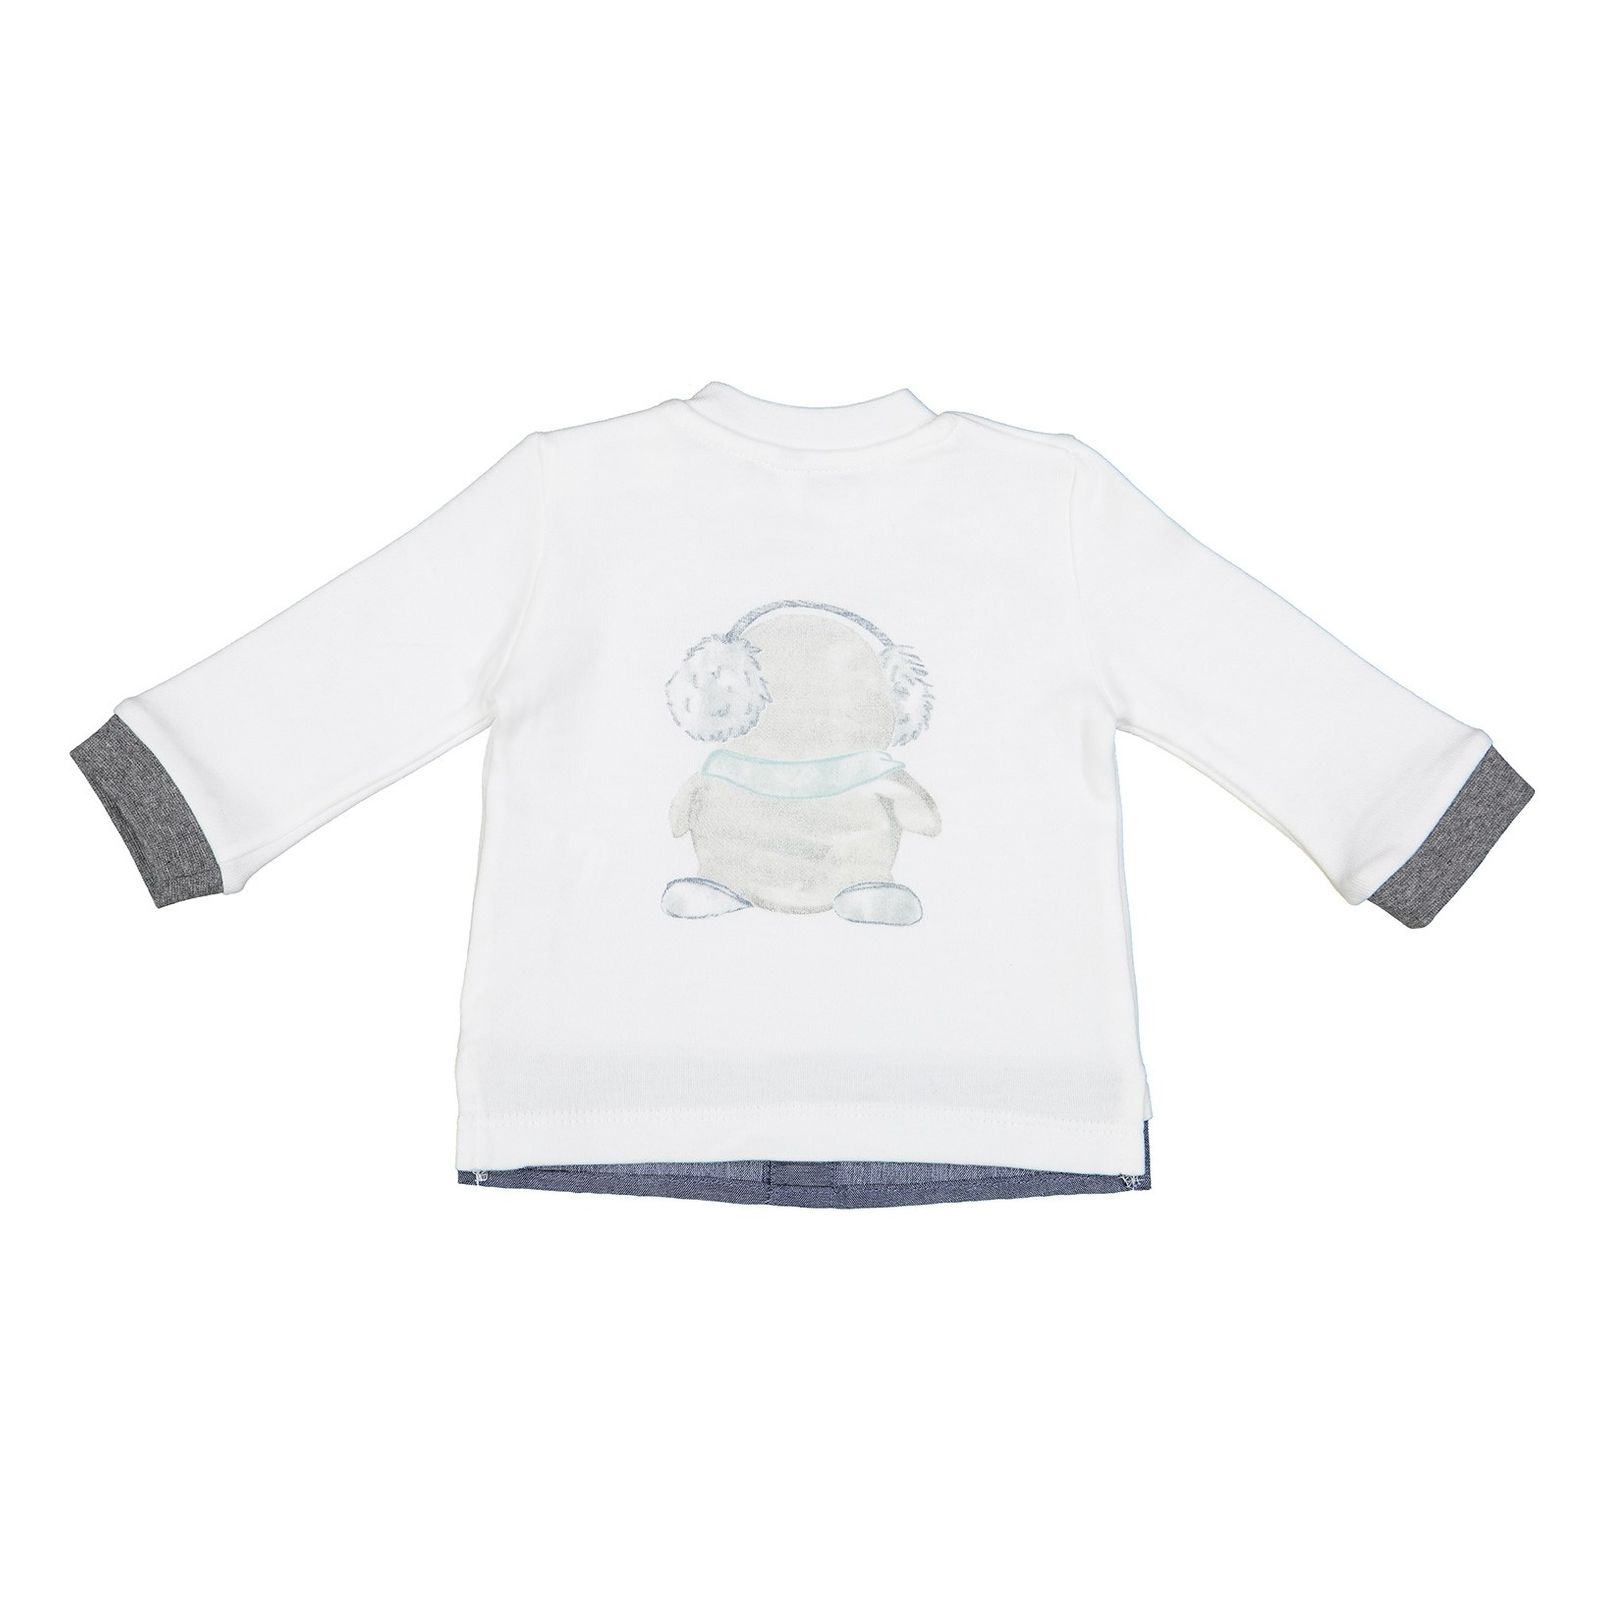 تی شرت نخی نوزادی پسرانه - ایدکس - سفید - 3